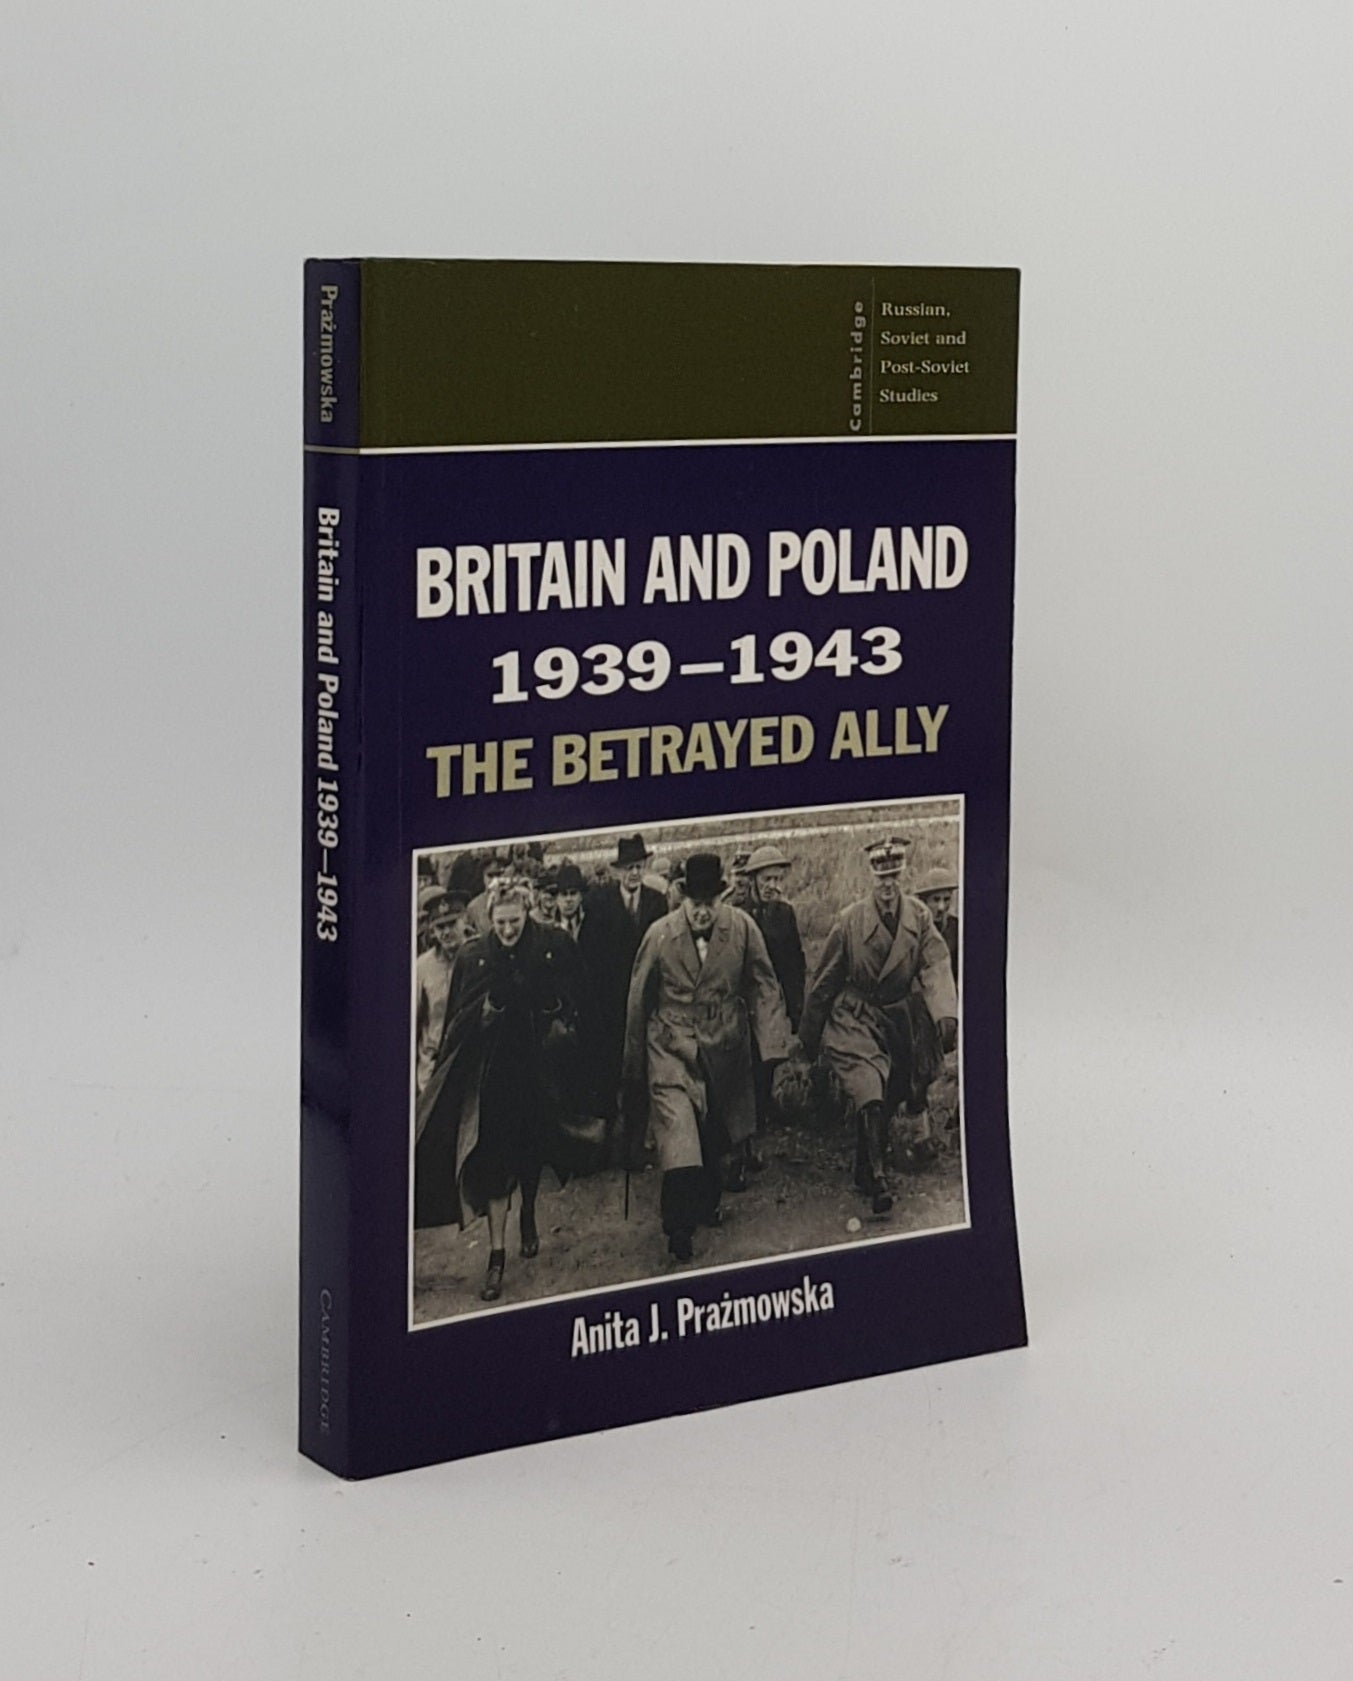 PRAZMOWSKA Anita J. - Britain and Poland 1939-1943 the Betrayed Ally